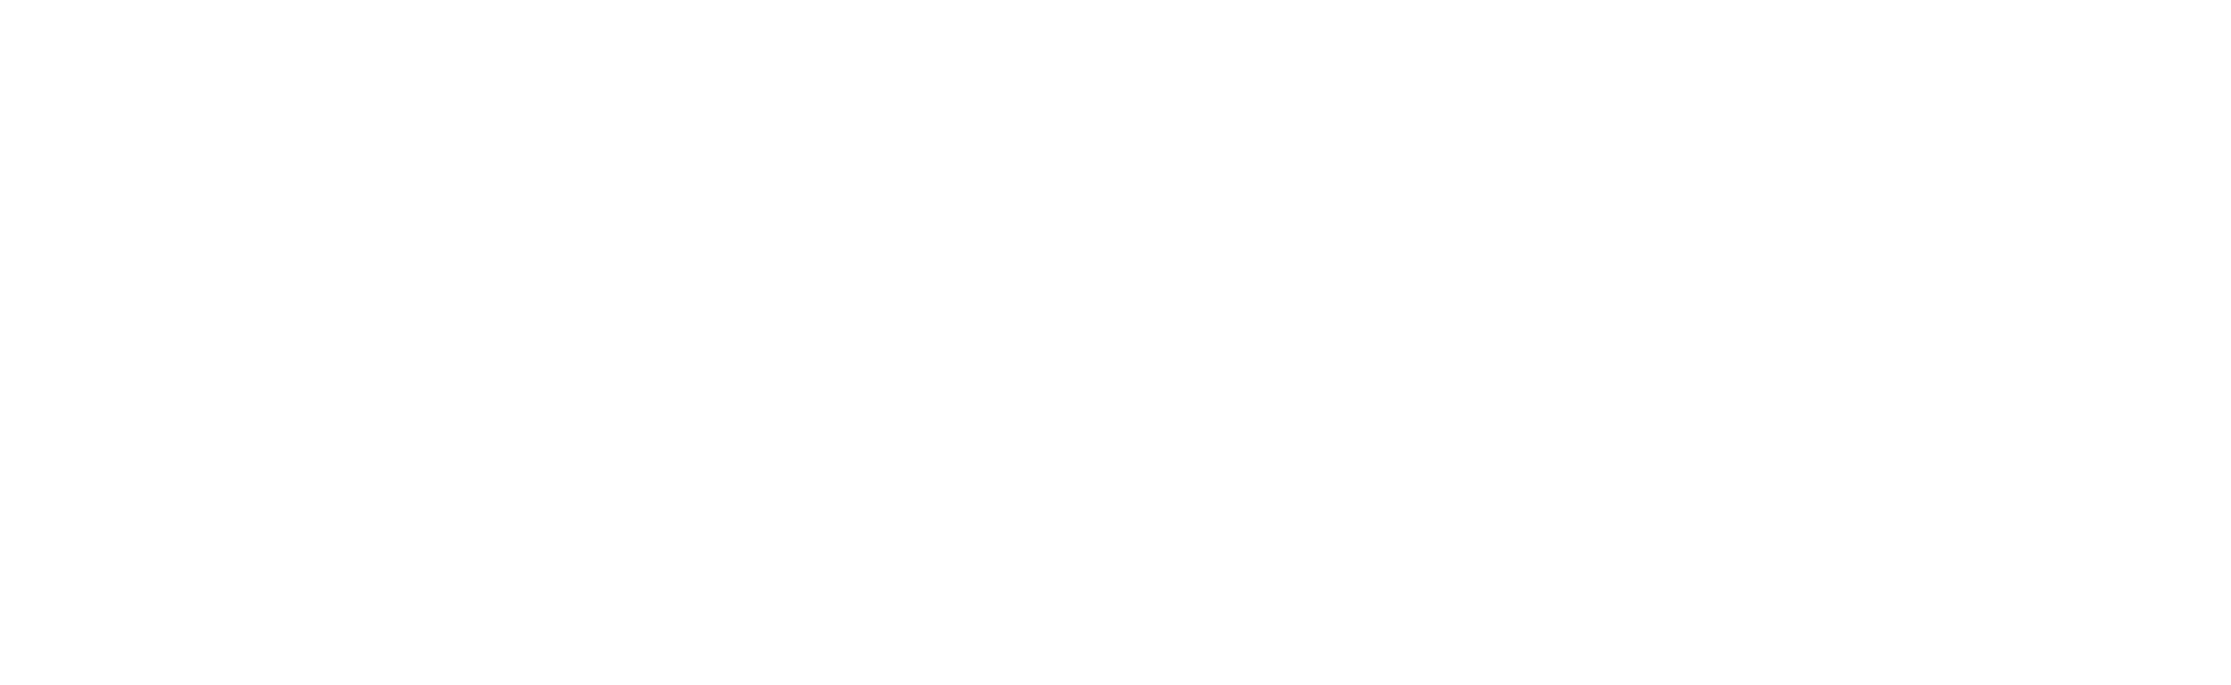 GT-logo